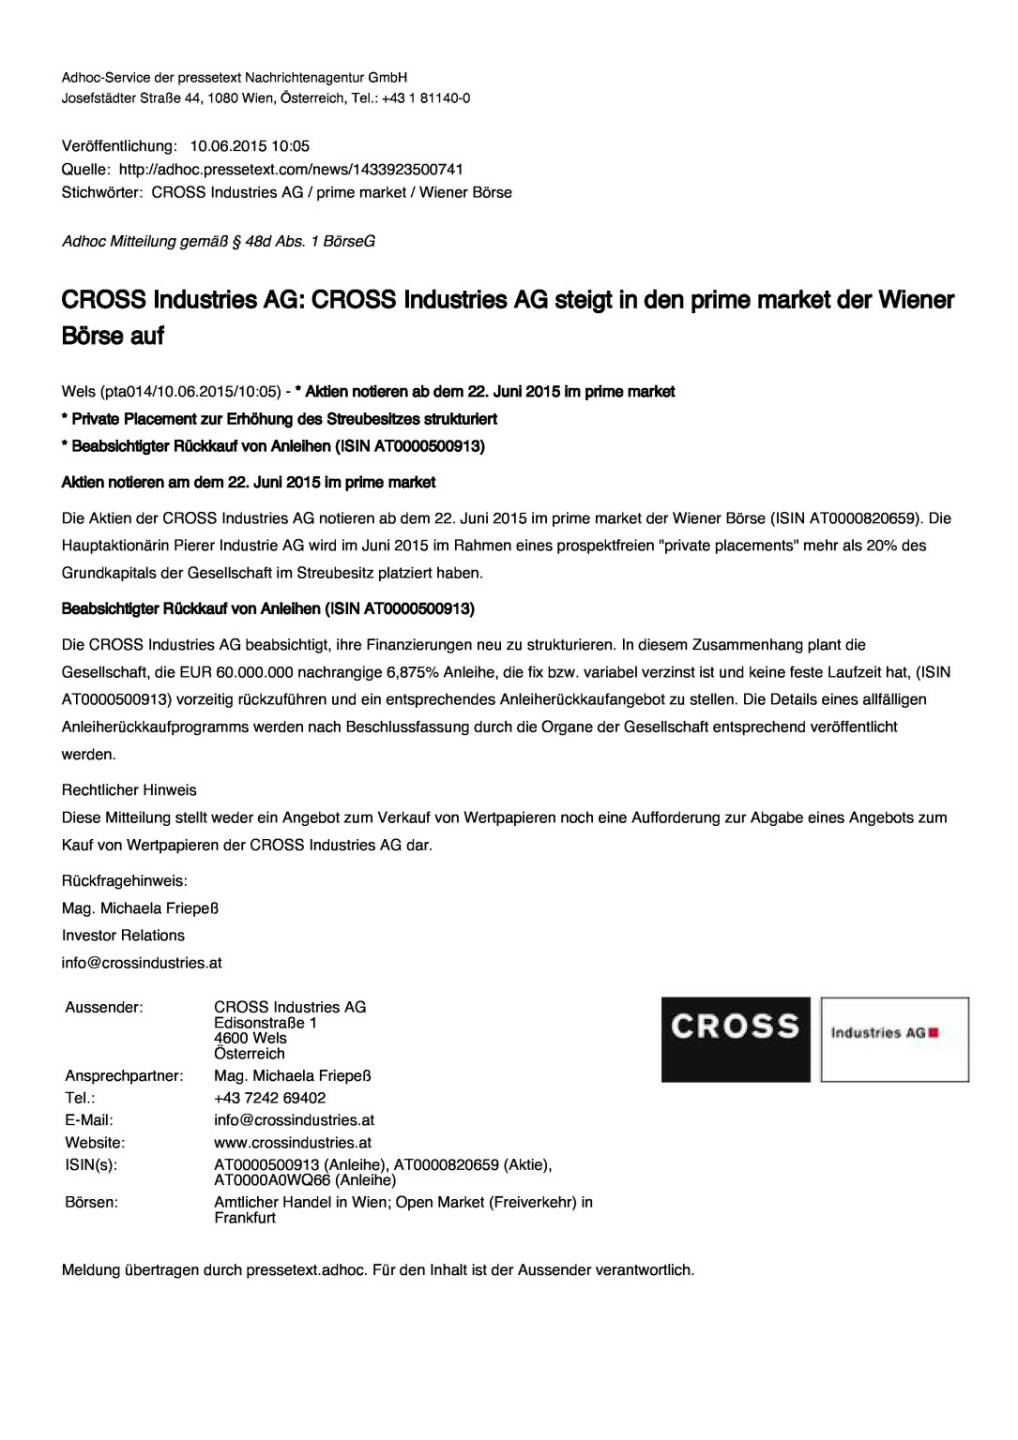  Cross Industries AG steigt in den prime market der Wiener Börse auf, Seite 1/1, komplettes Dokument unter http://boerse-social.com/static/uploads/file_110_cross_prime.pdf